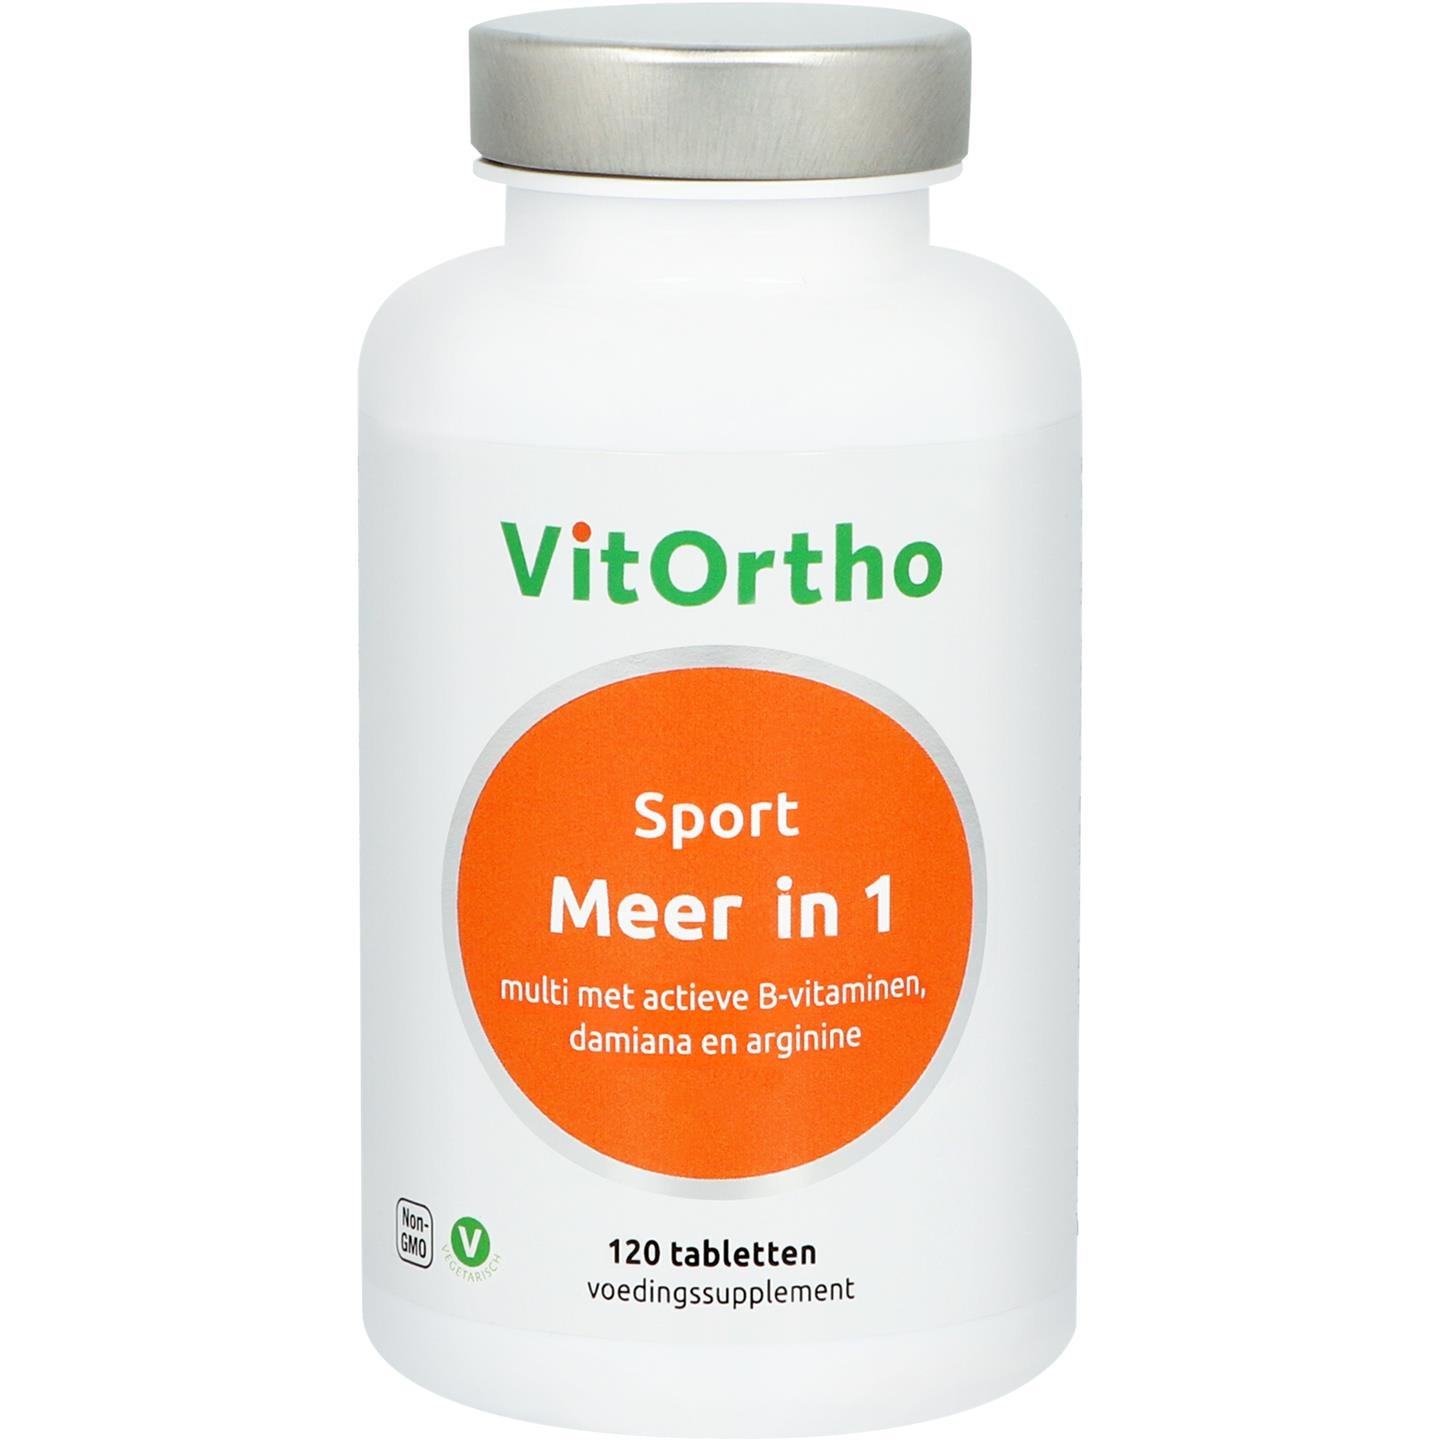 Vitortho VitOrtho Mehr in 1 Sport (120 Tabletten)